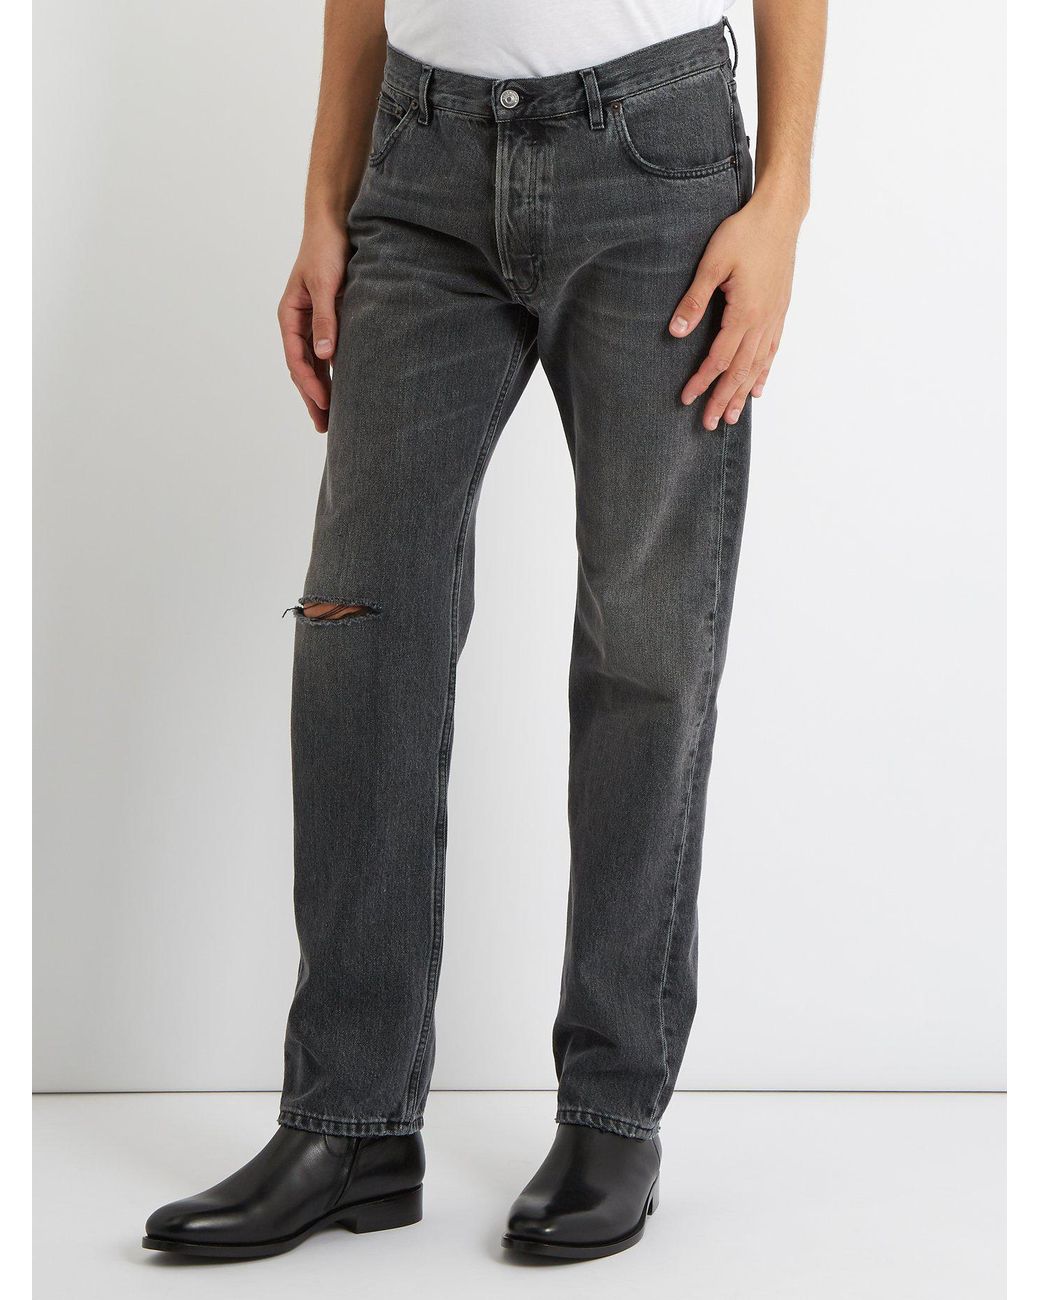 Balenciaga Archetypes Distressed Straight Leg Jeans in Gray Lyst